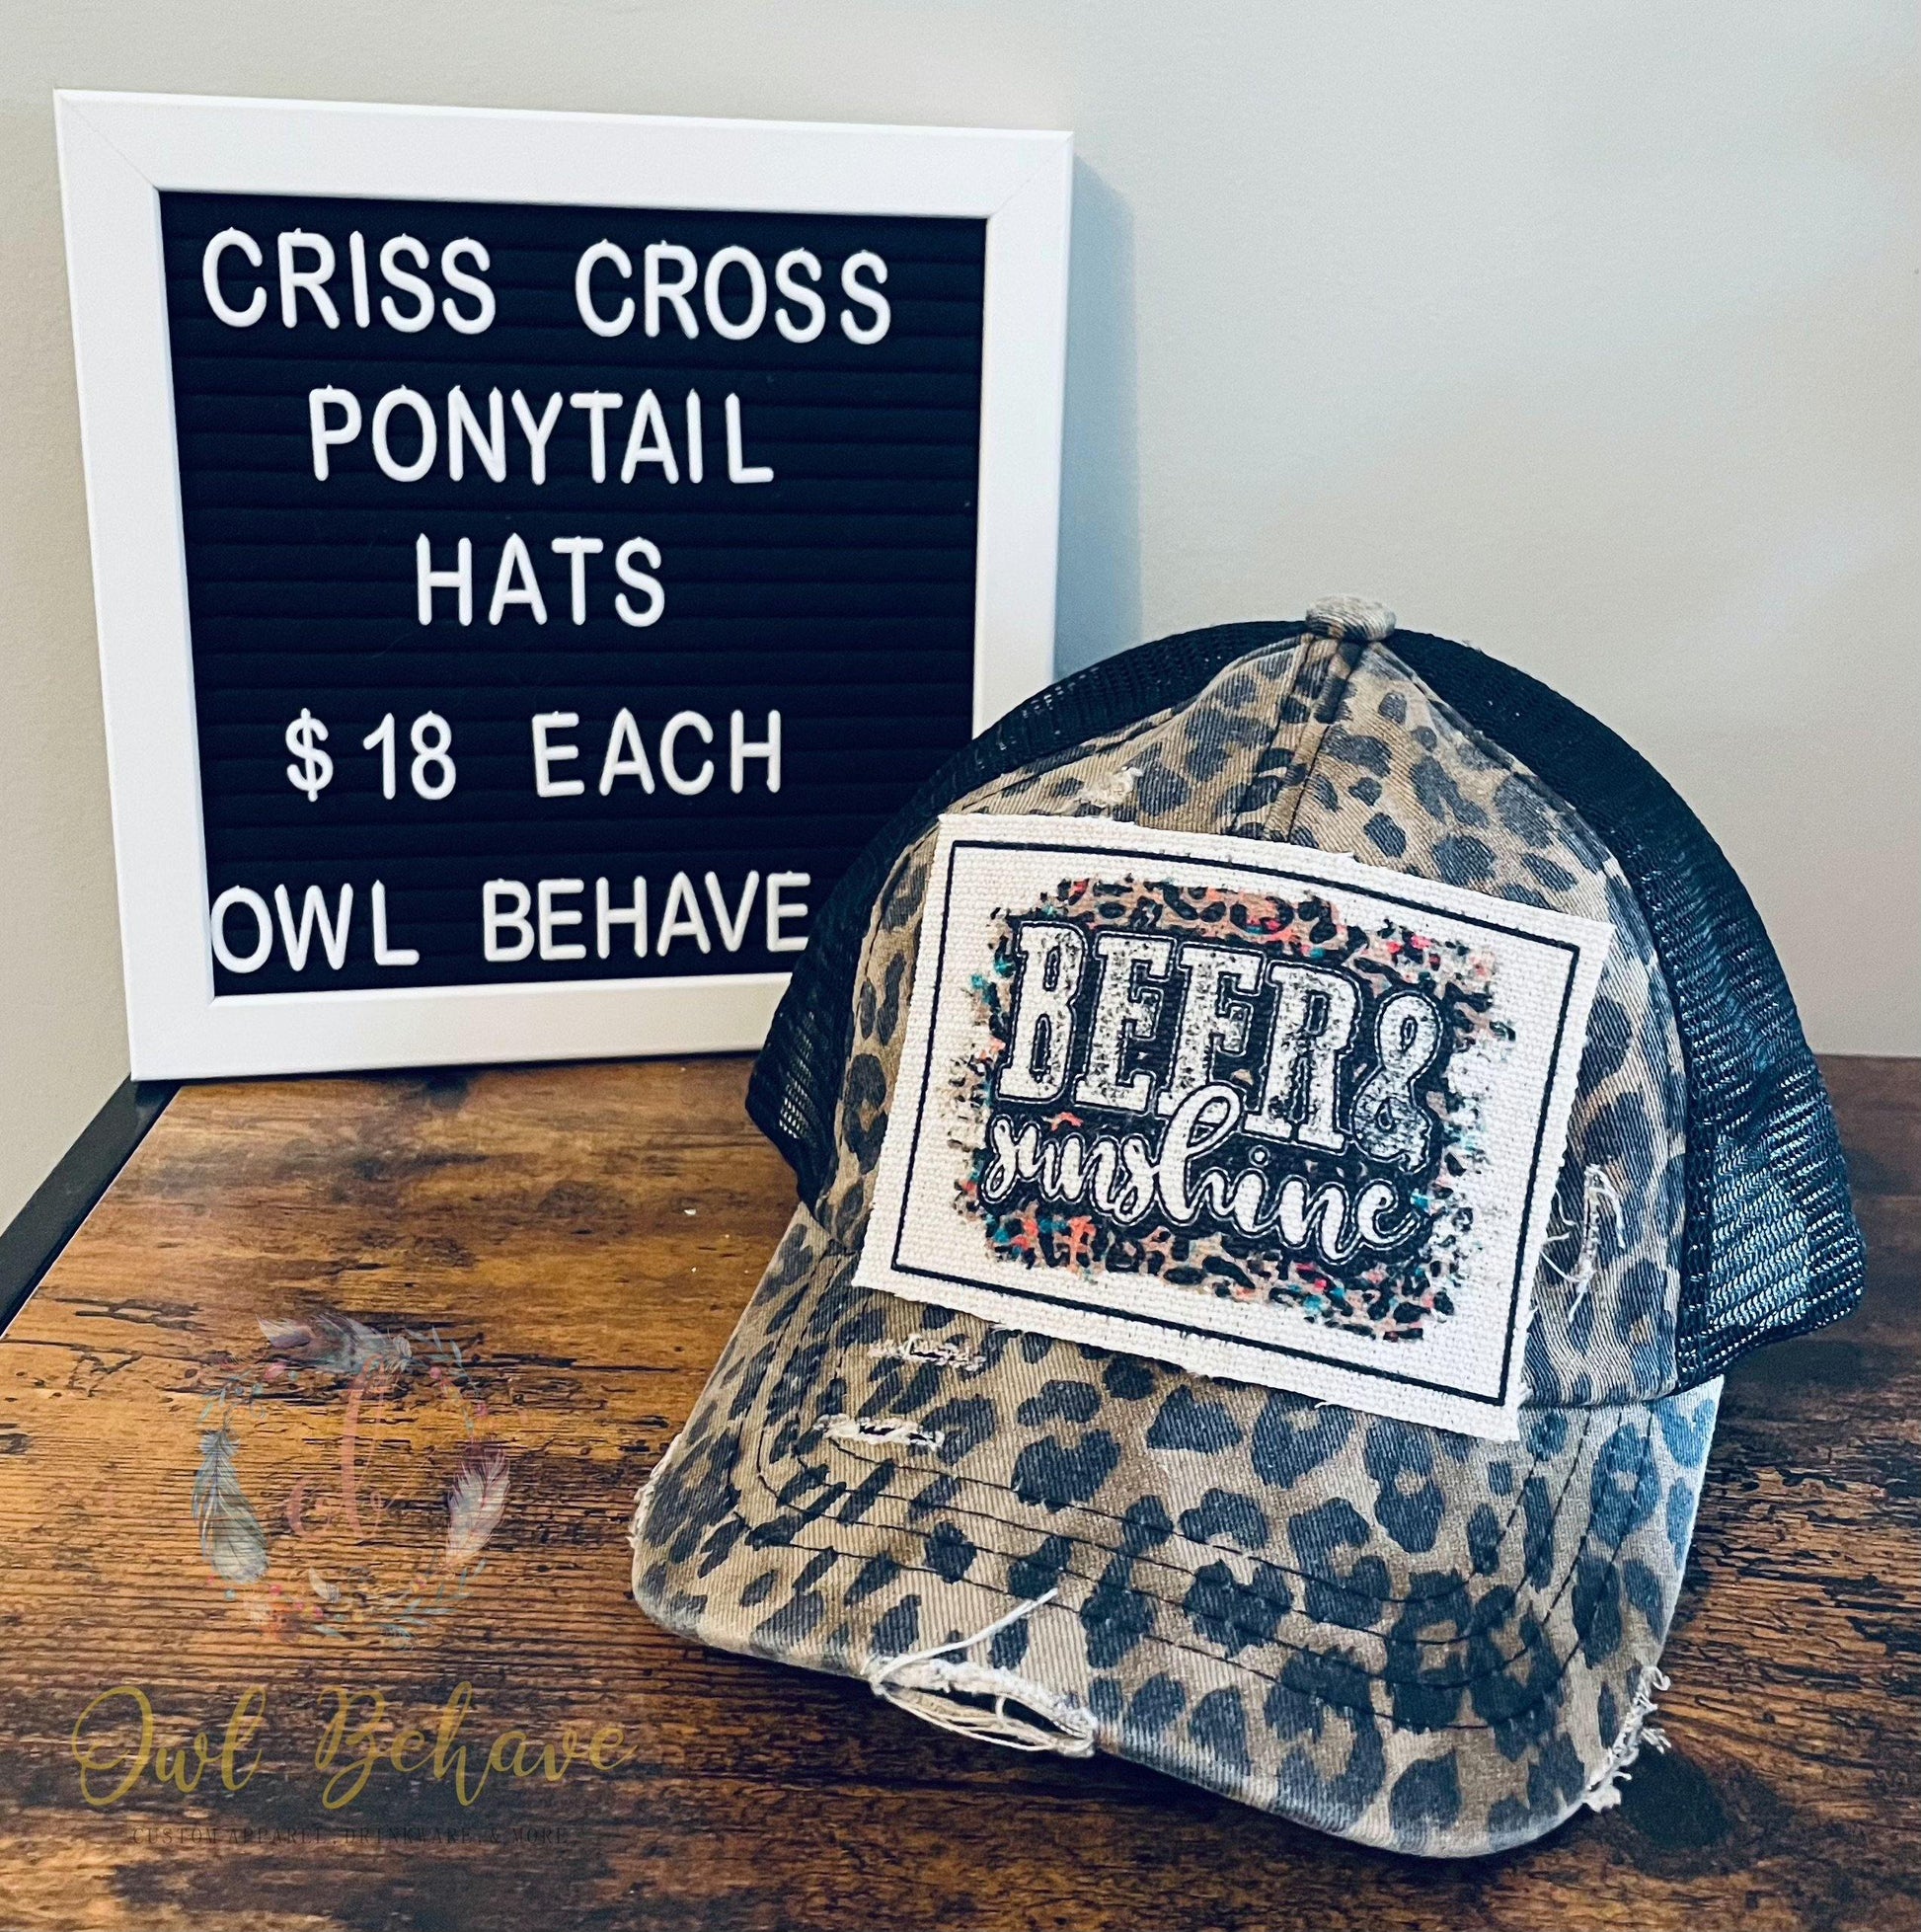 Beer & Sunshine Criss Cross Ponytail Hat - OwlBehave 